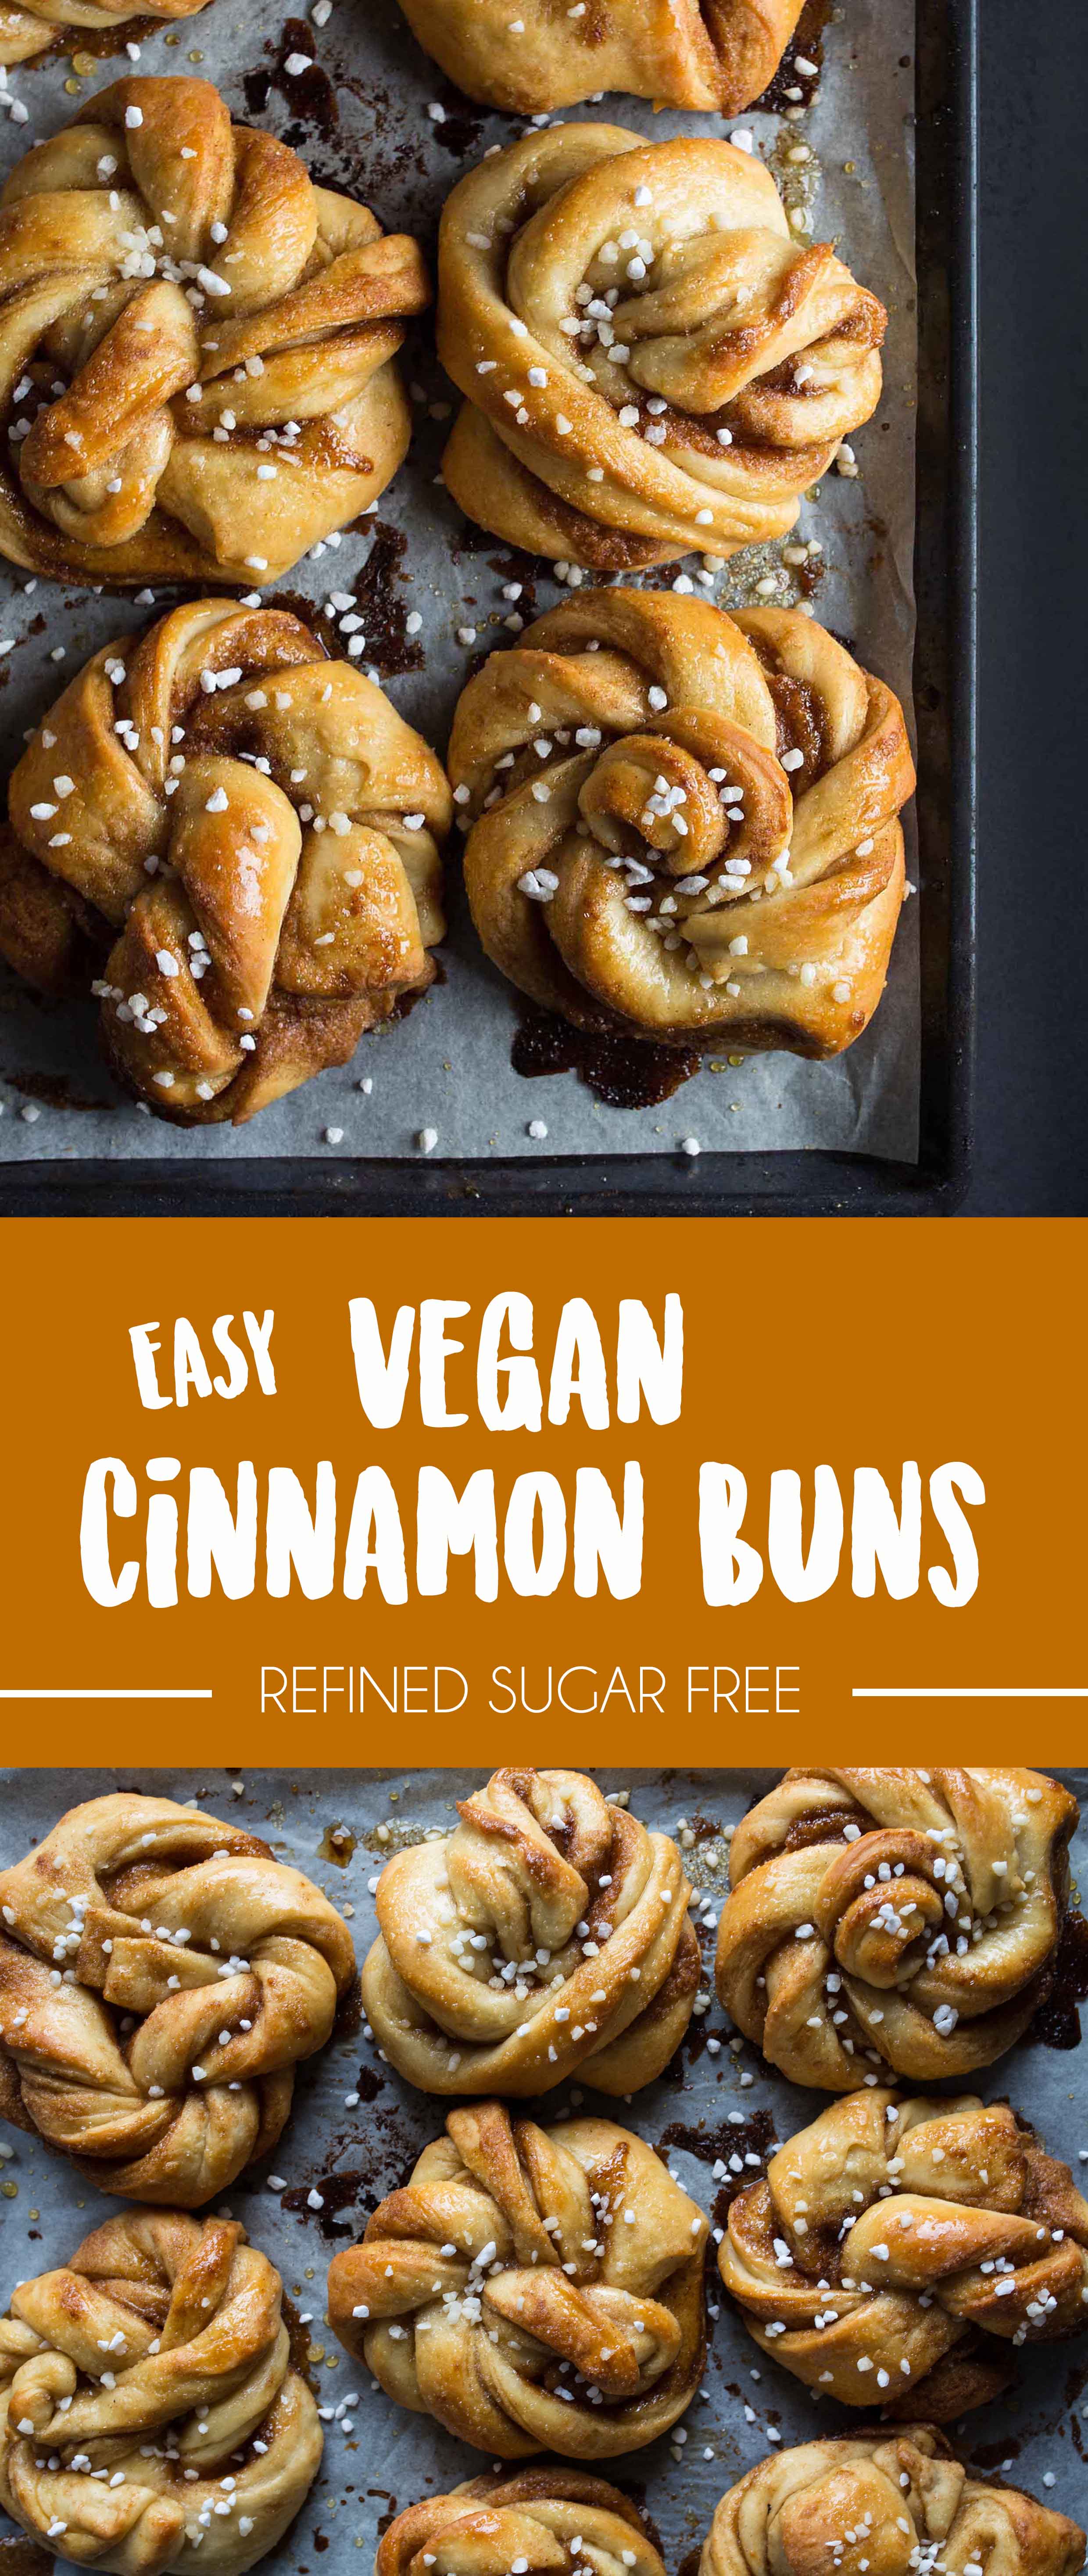 The best vegan Cinnamon Buns